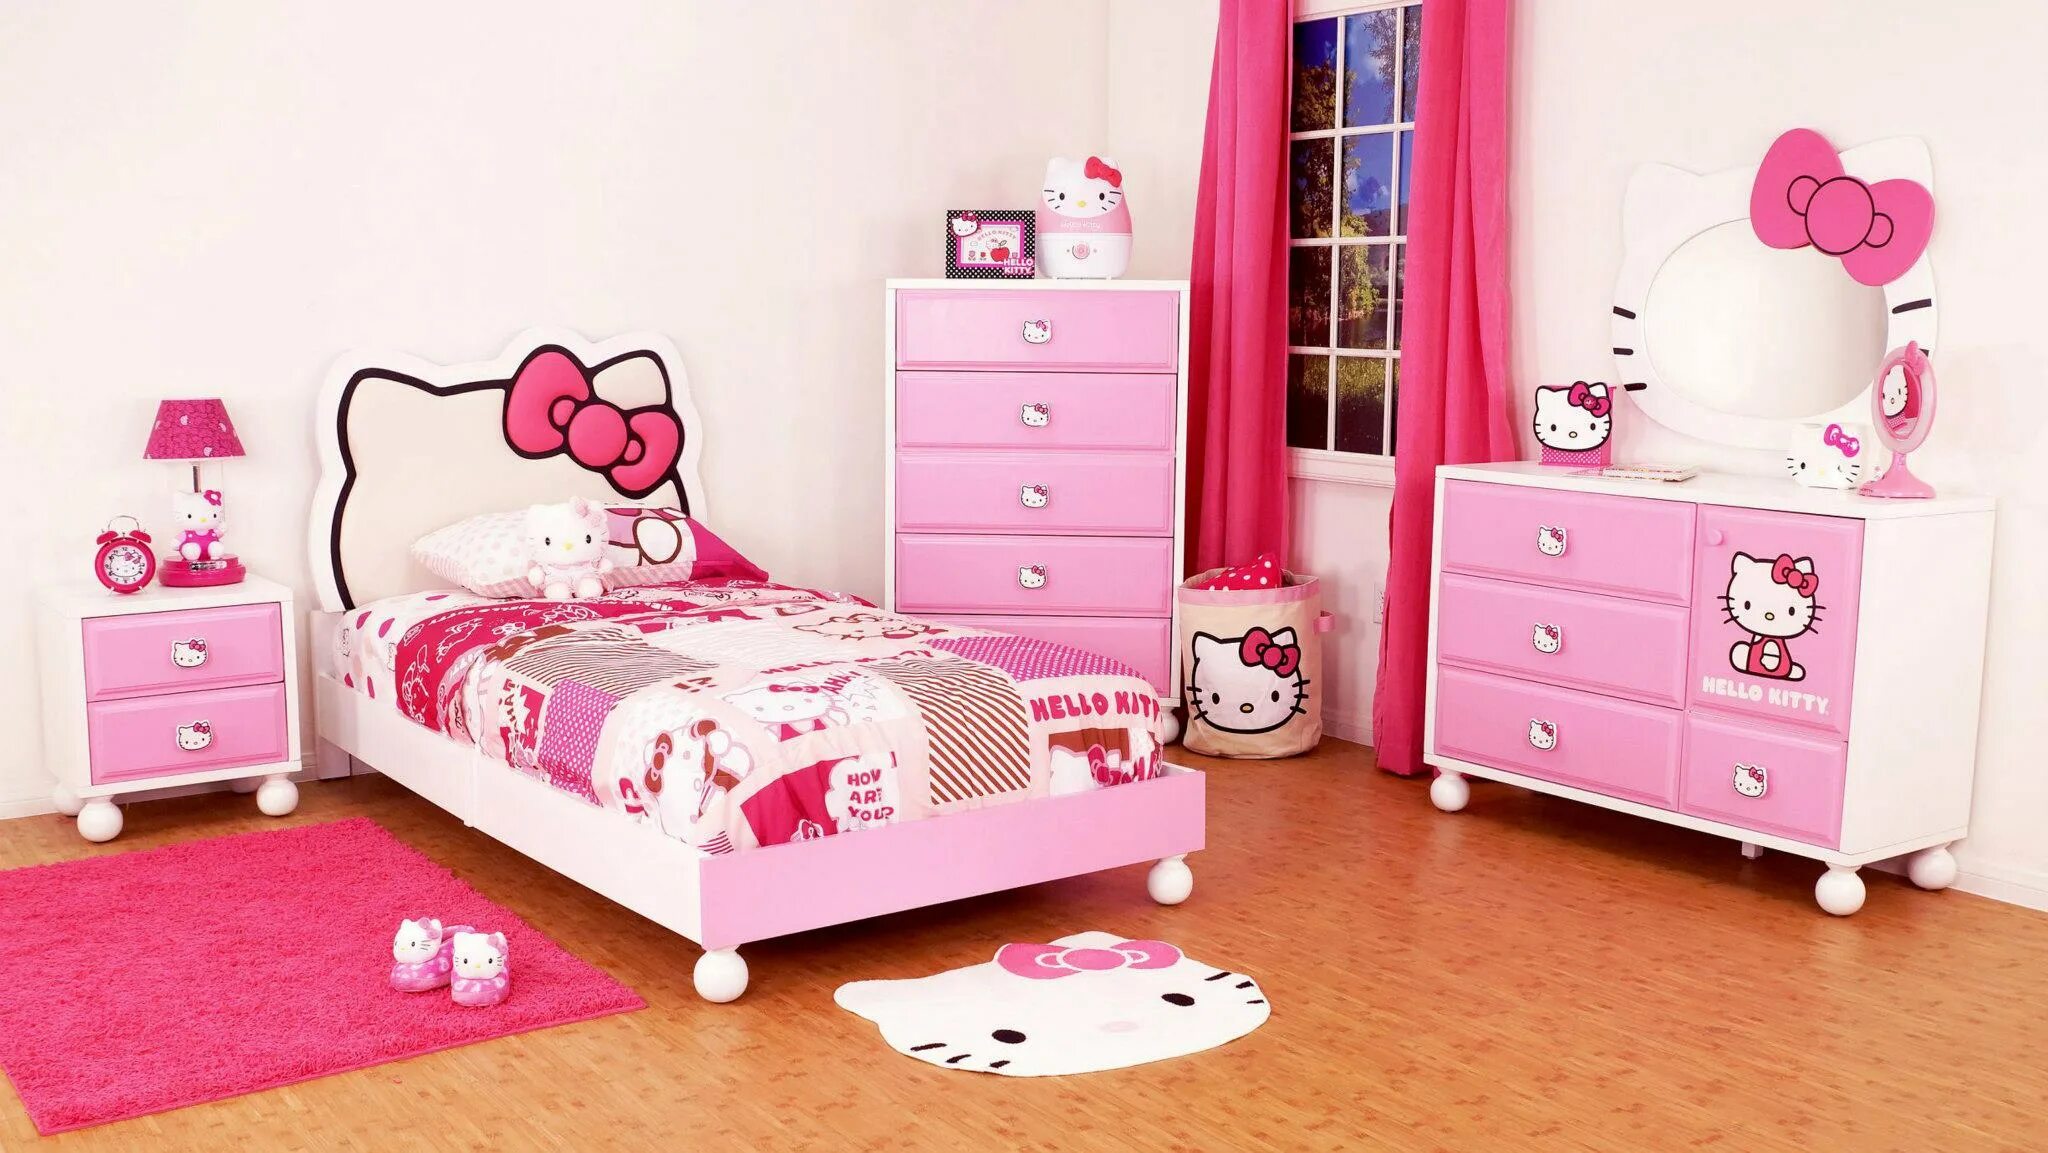 Девушка хеллоу китти. Хелло Китти комната. Розовое комната Хелоу Китти. Спальня Хеллоу Китти. Розовая комната Хеллоу Китти.